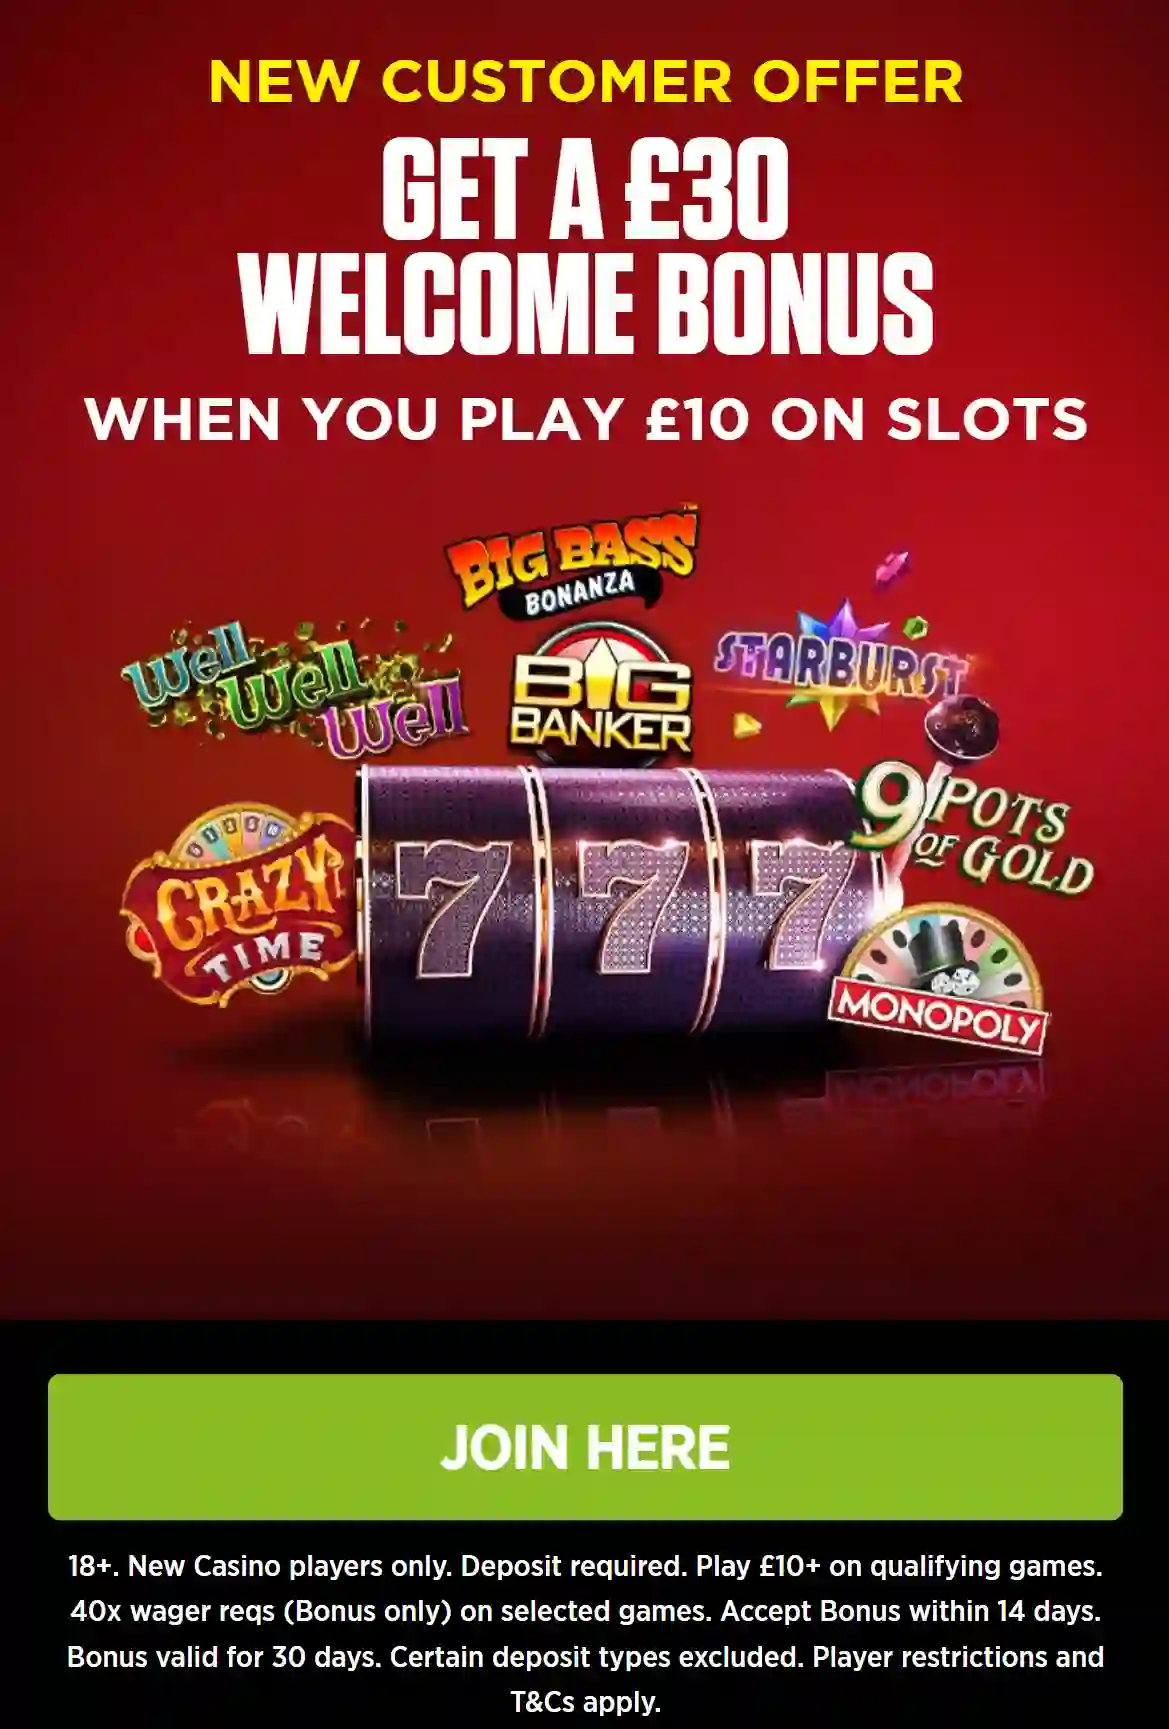 Ladbrokes Casino Bonus Code